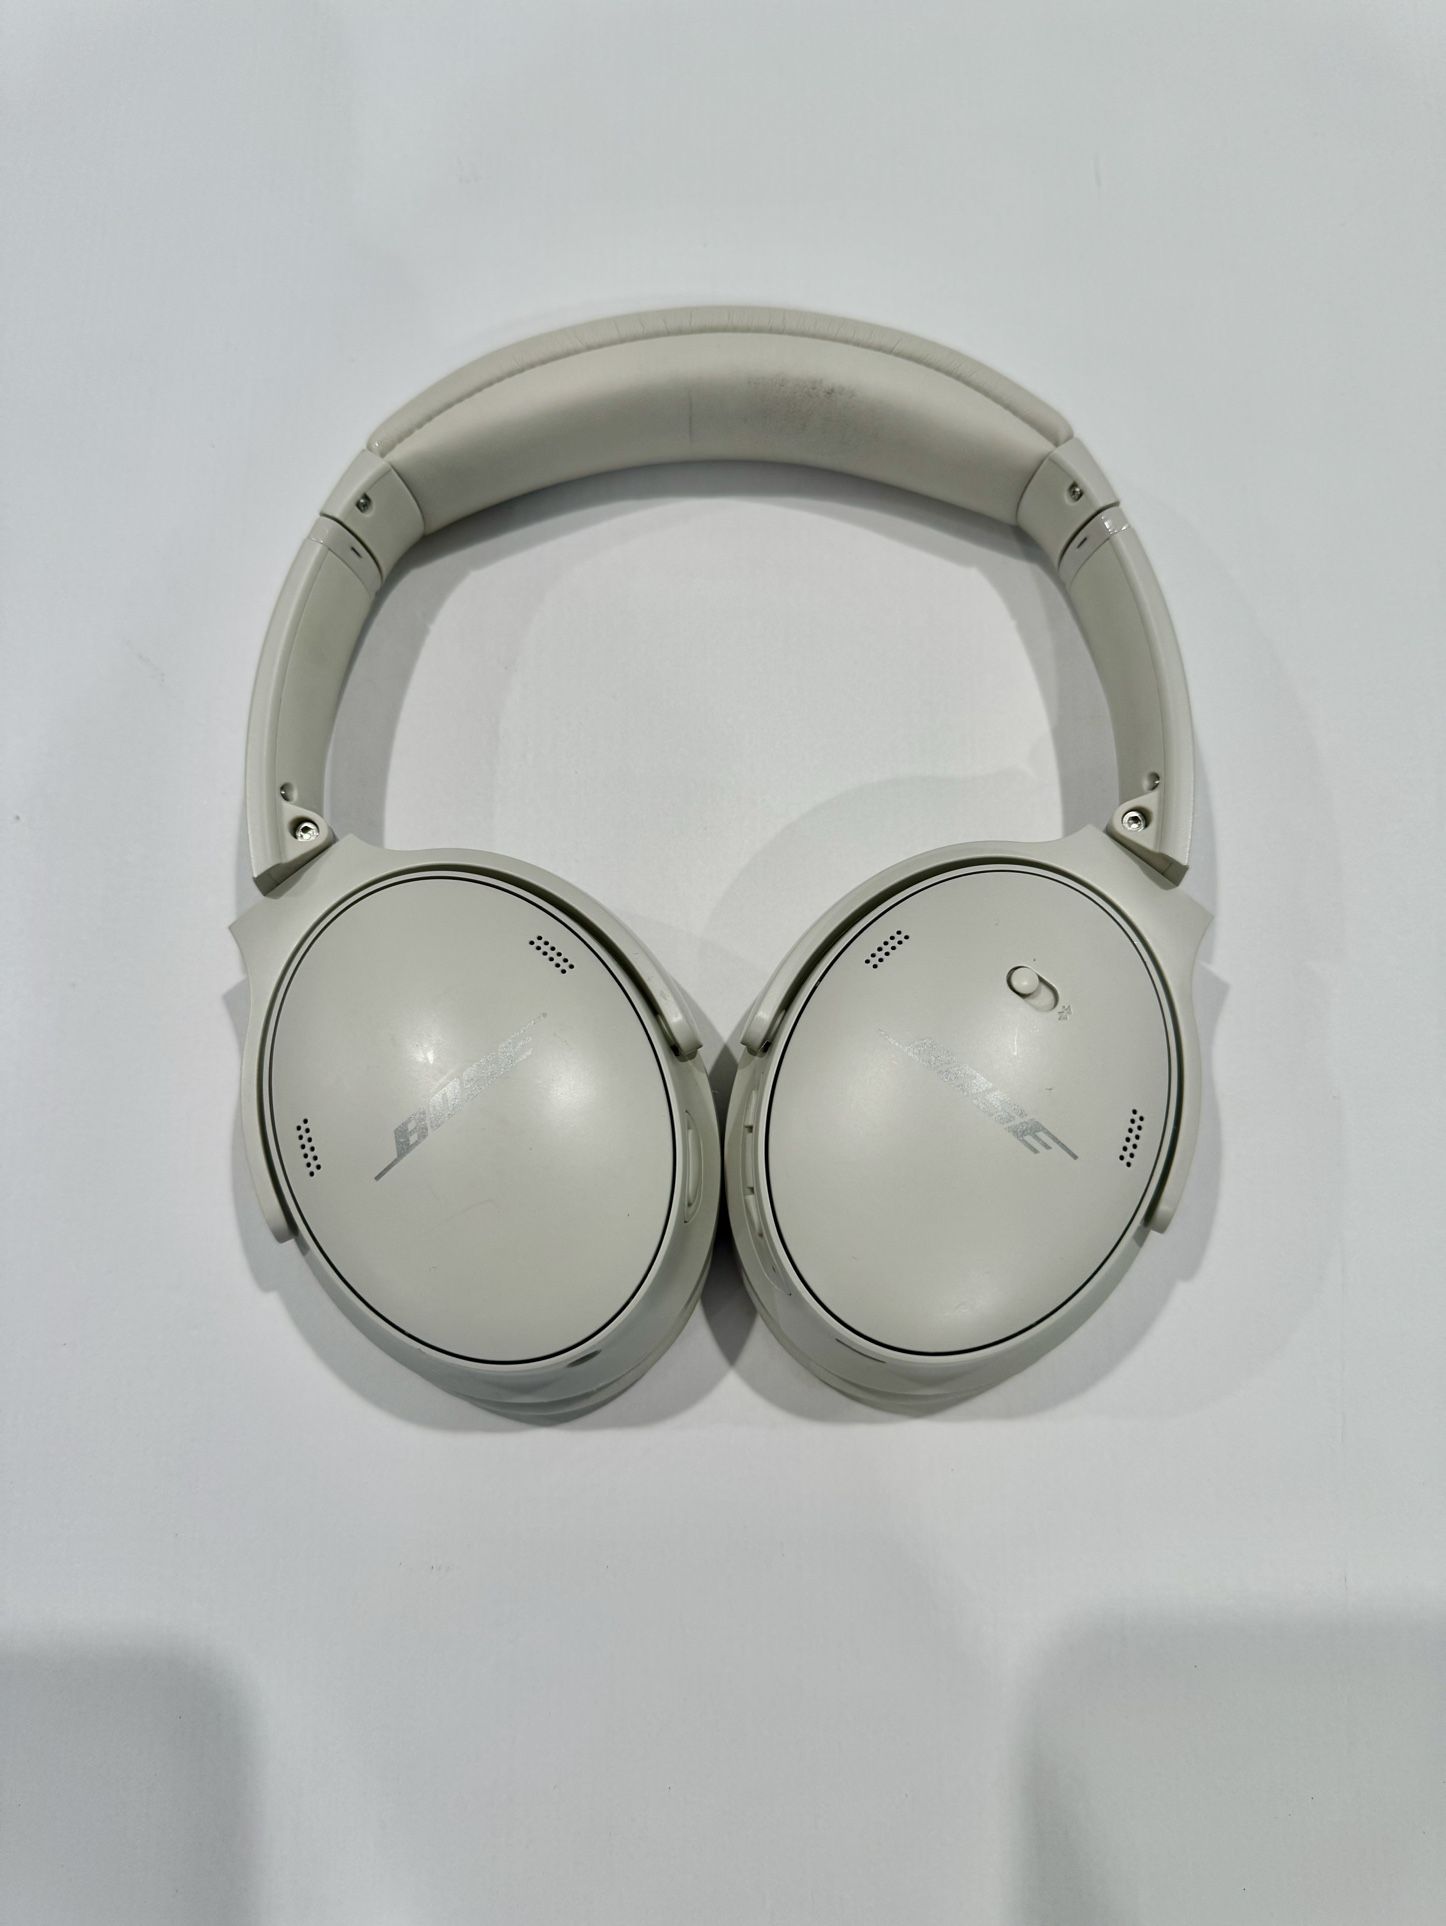 Beautiful Bose Quiet Comfort Headphones In White (Good Condition)